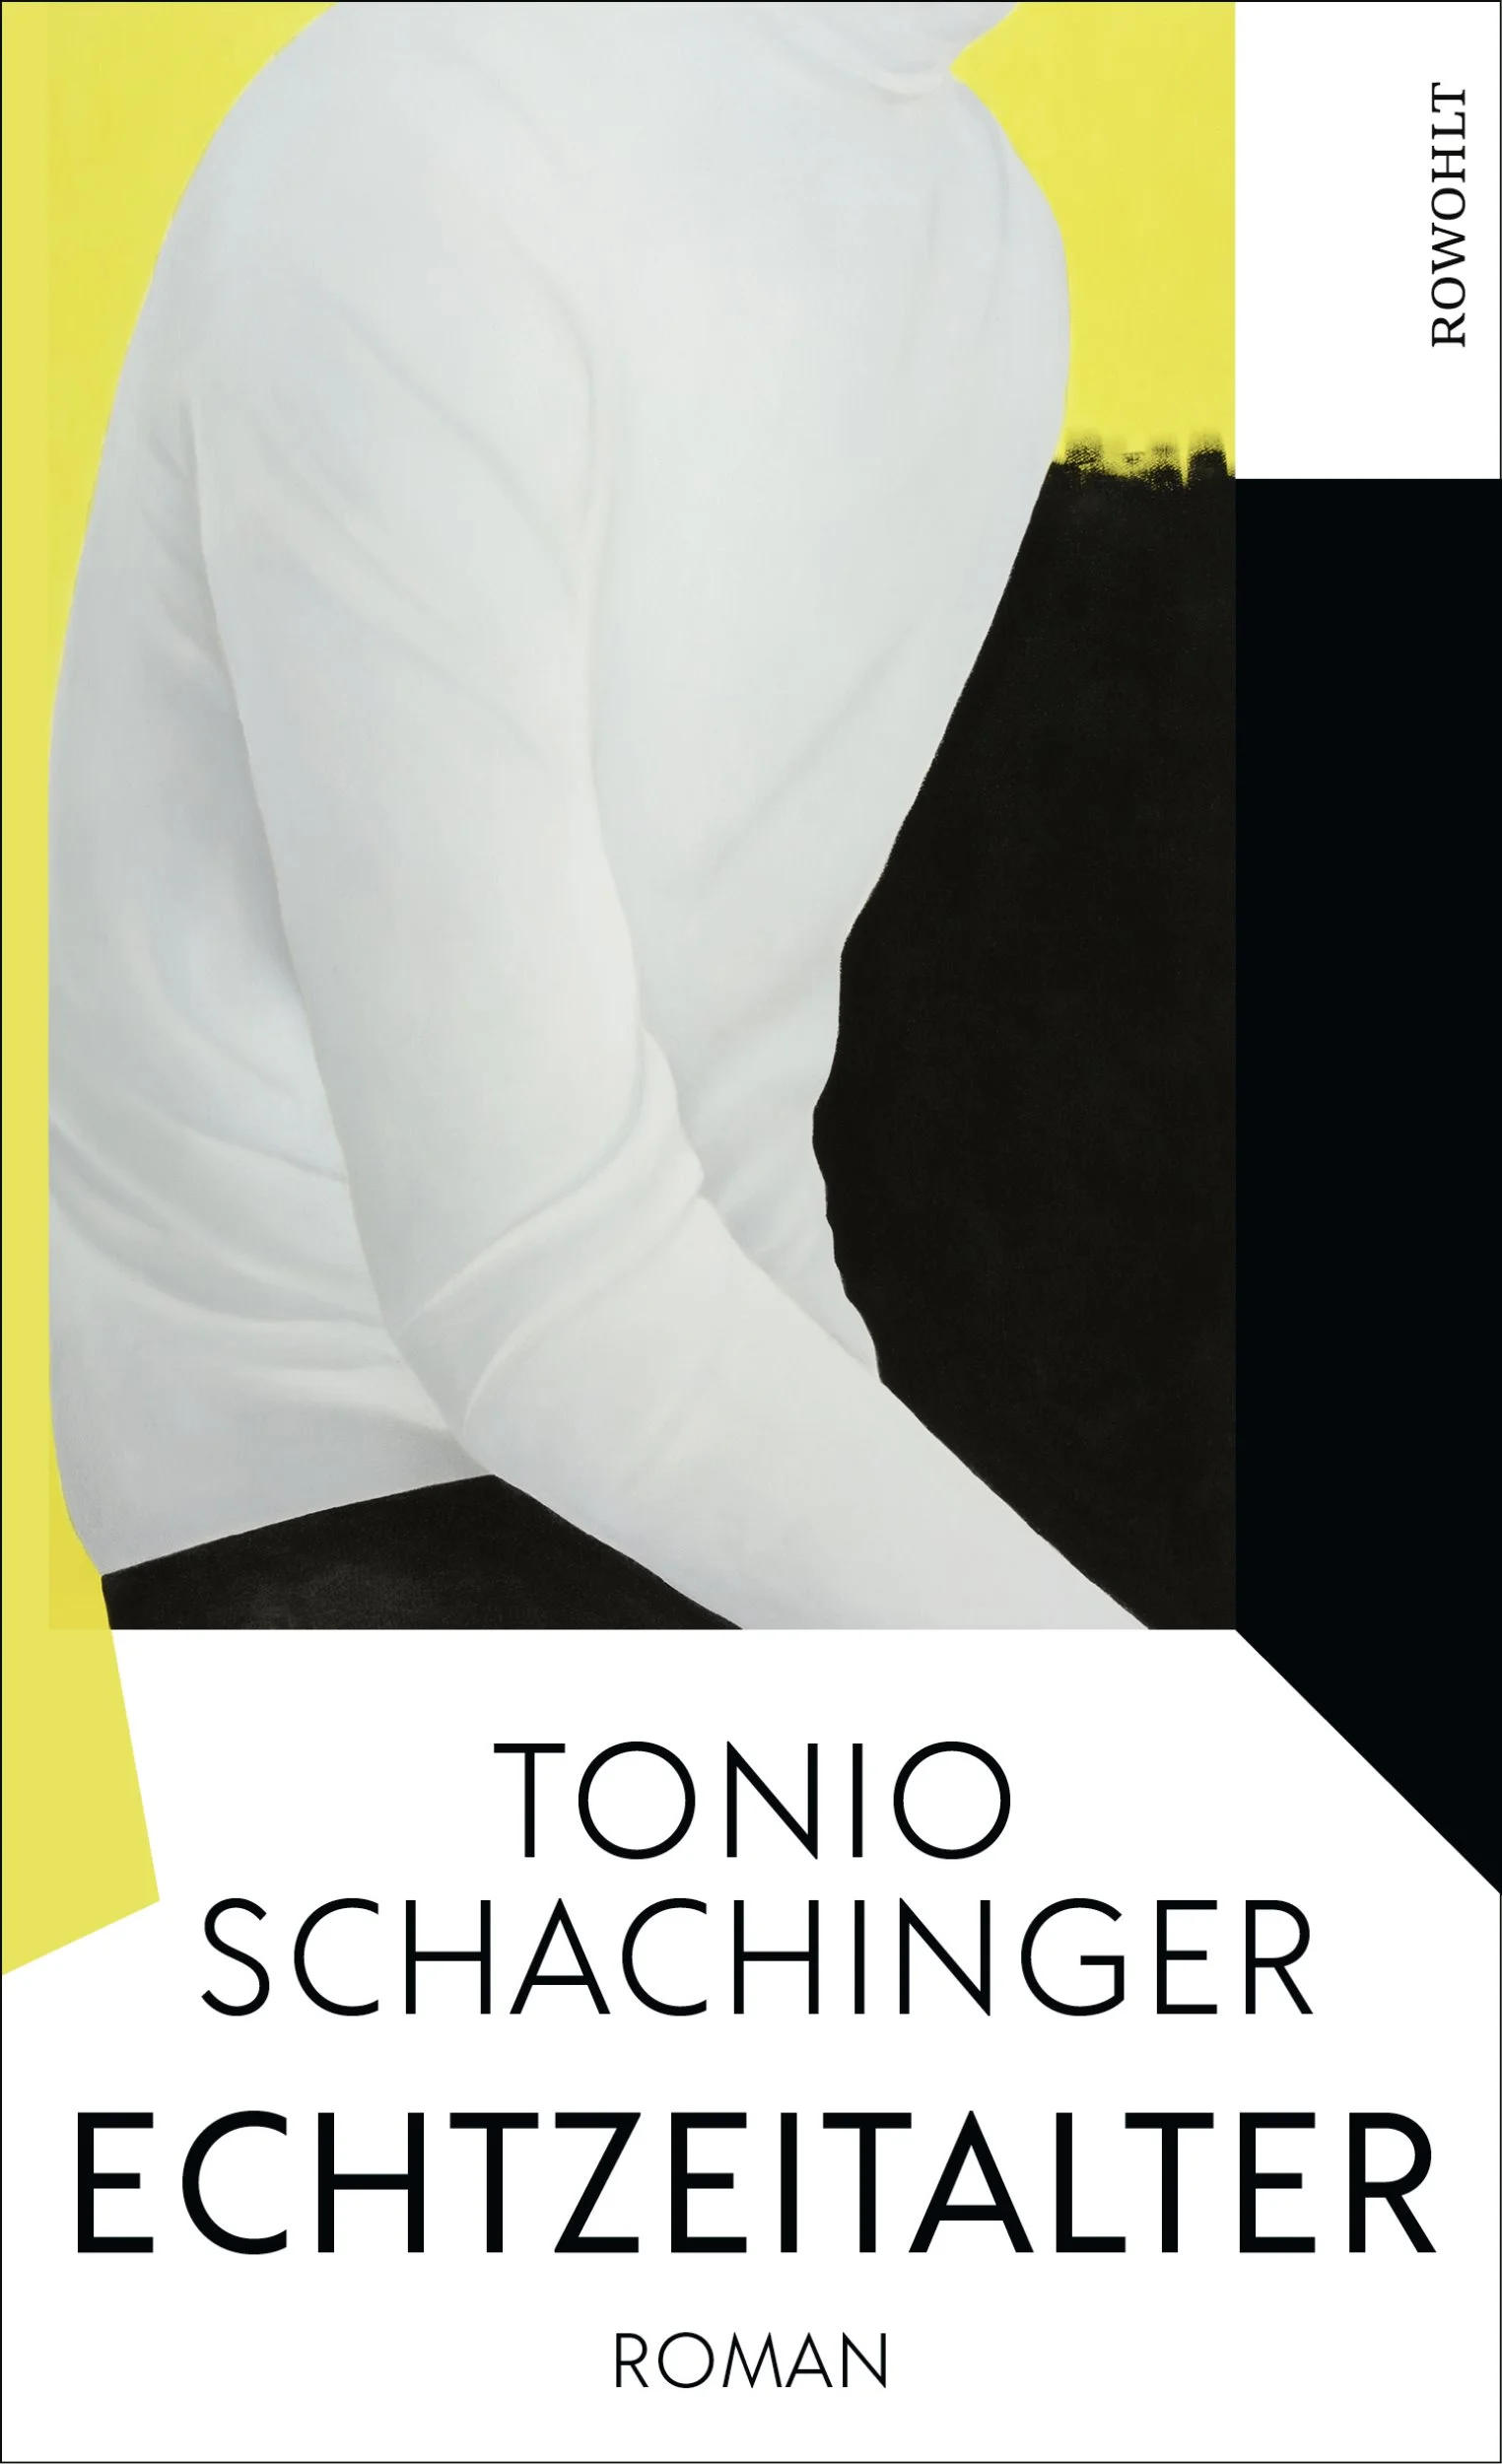 Tonio Schachinger